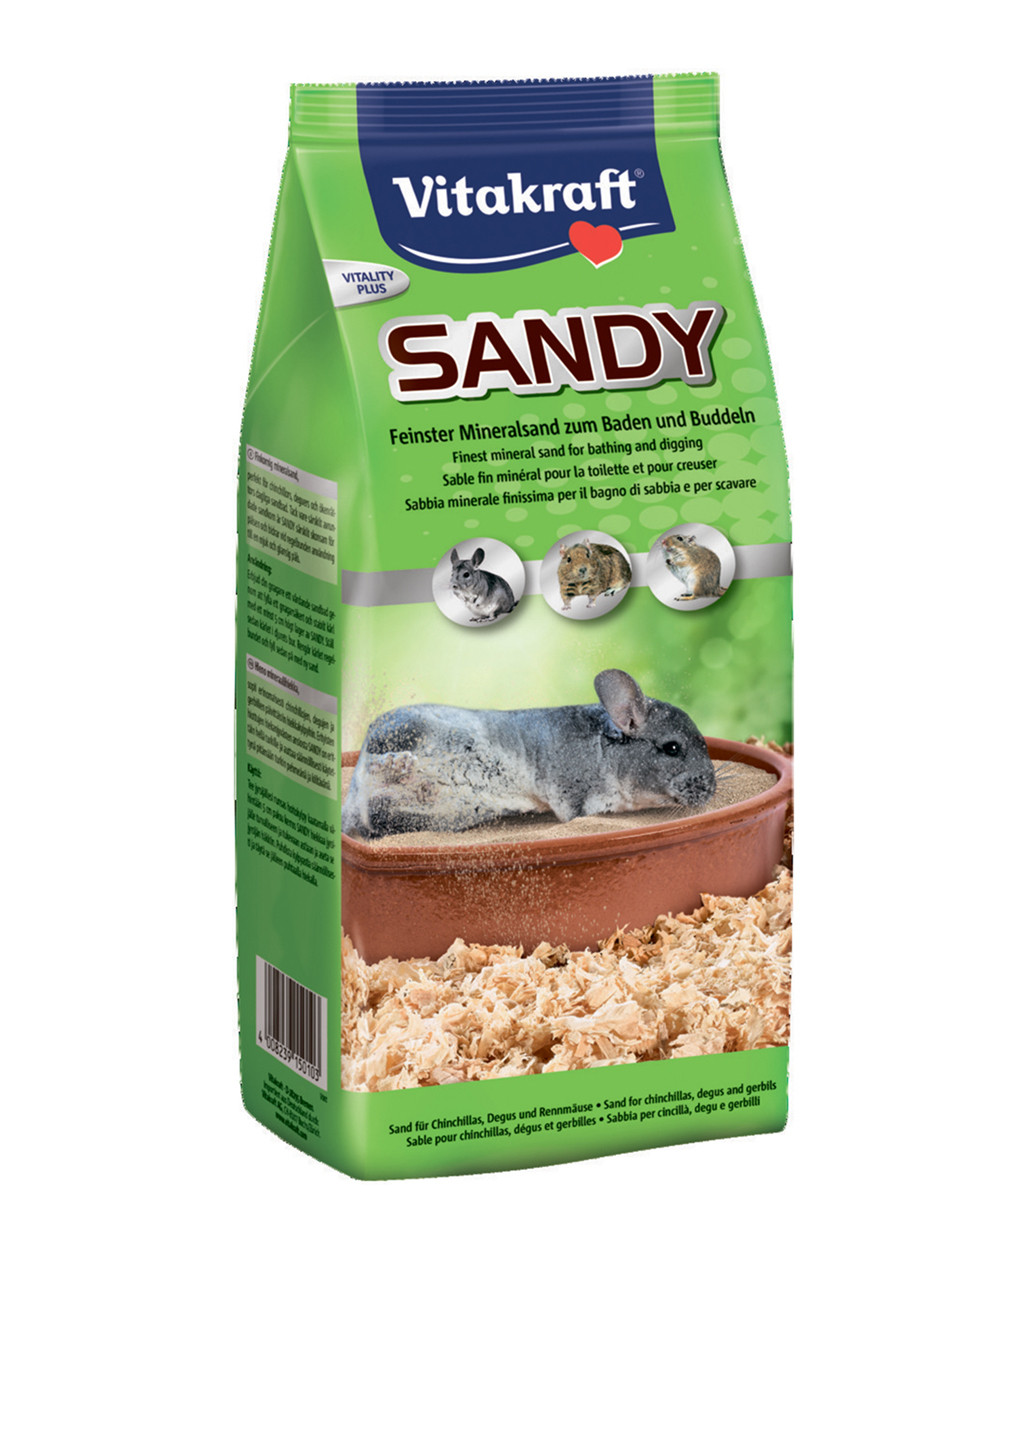 Песок для купания SANDY, 1 кг Vitakraft (142042206)